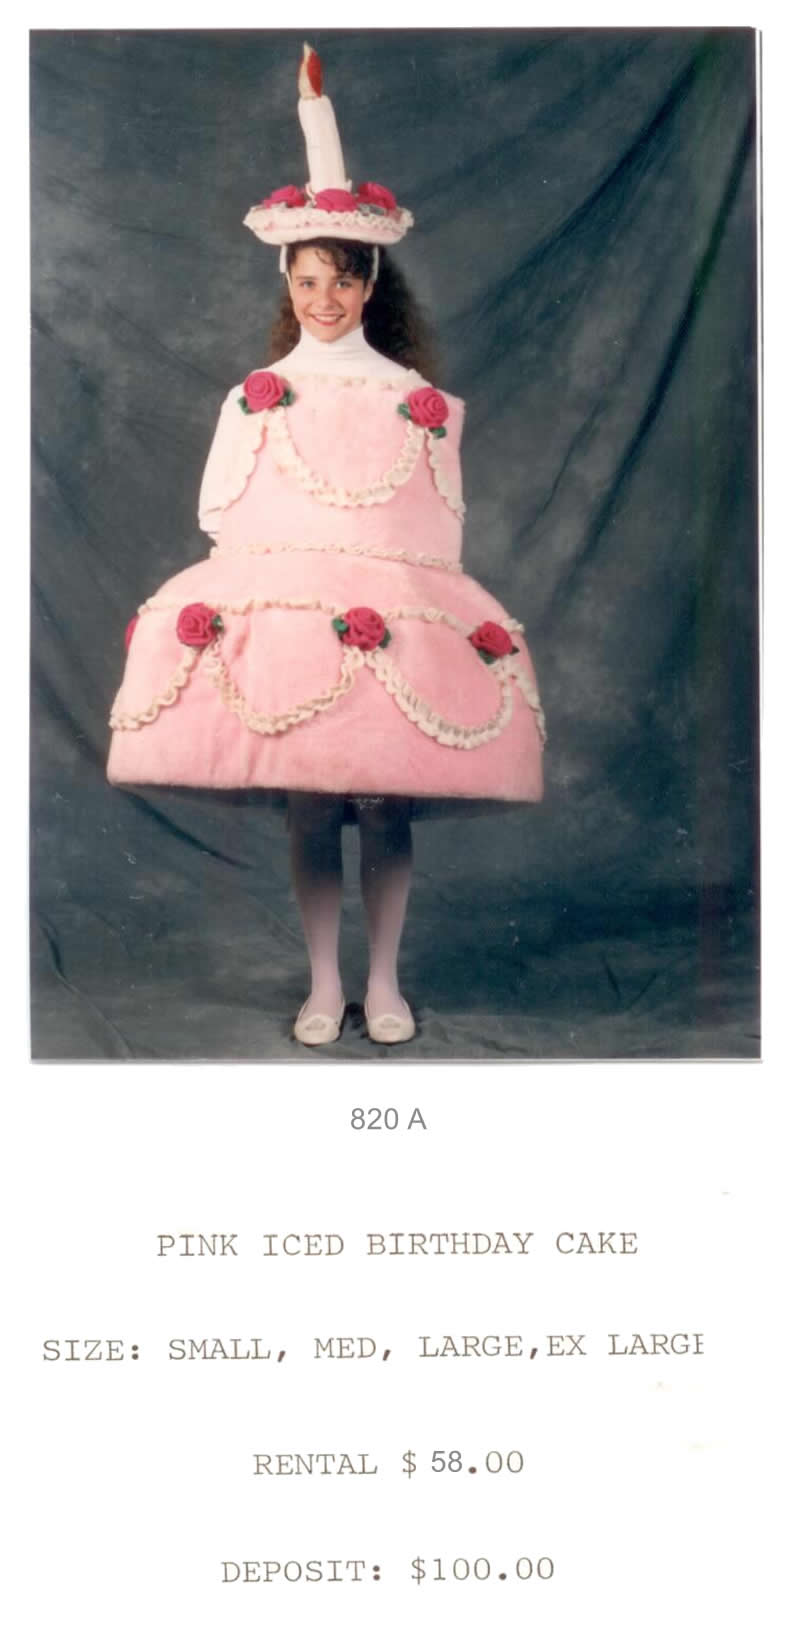 PINK ICED BIRTHDAY CAKE